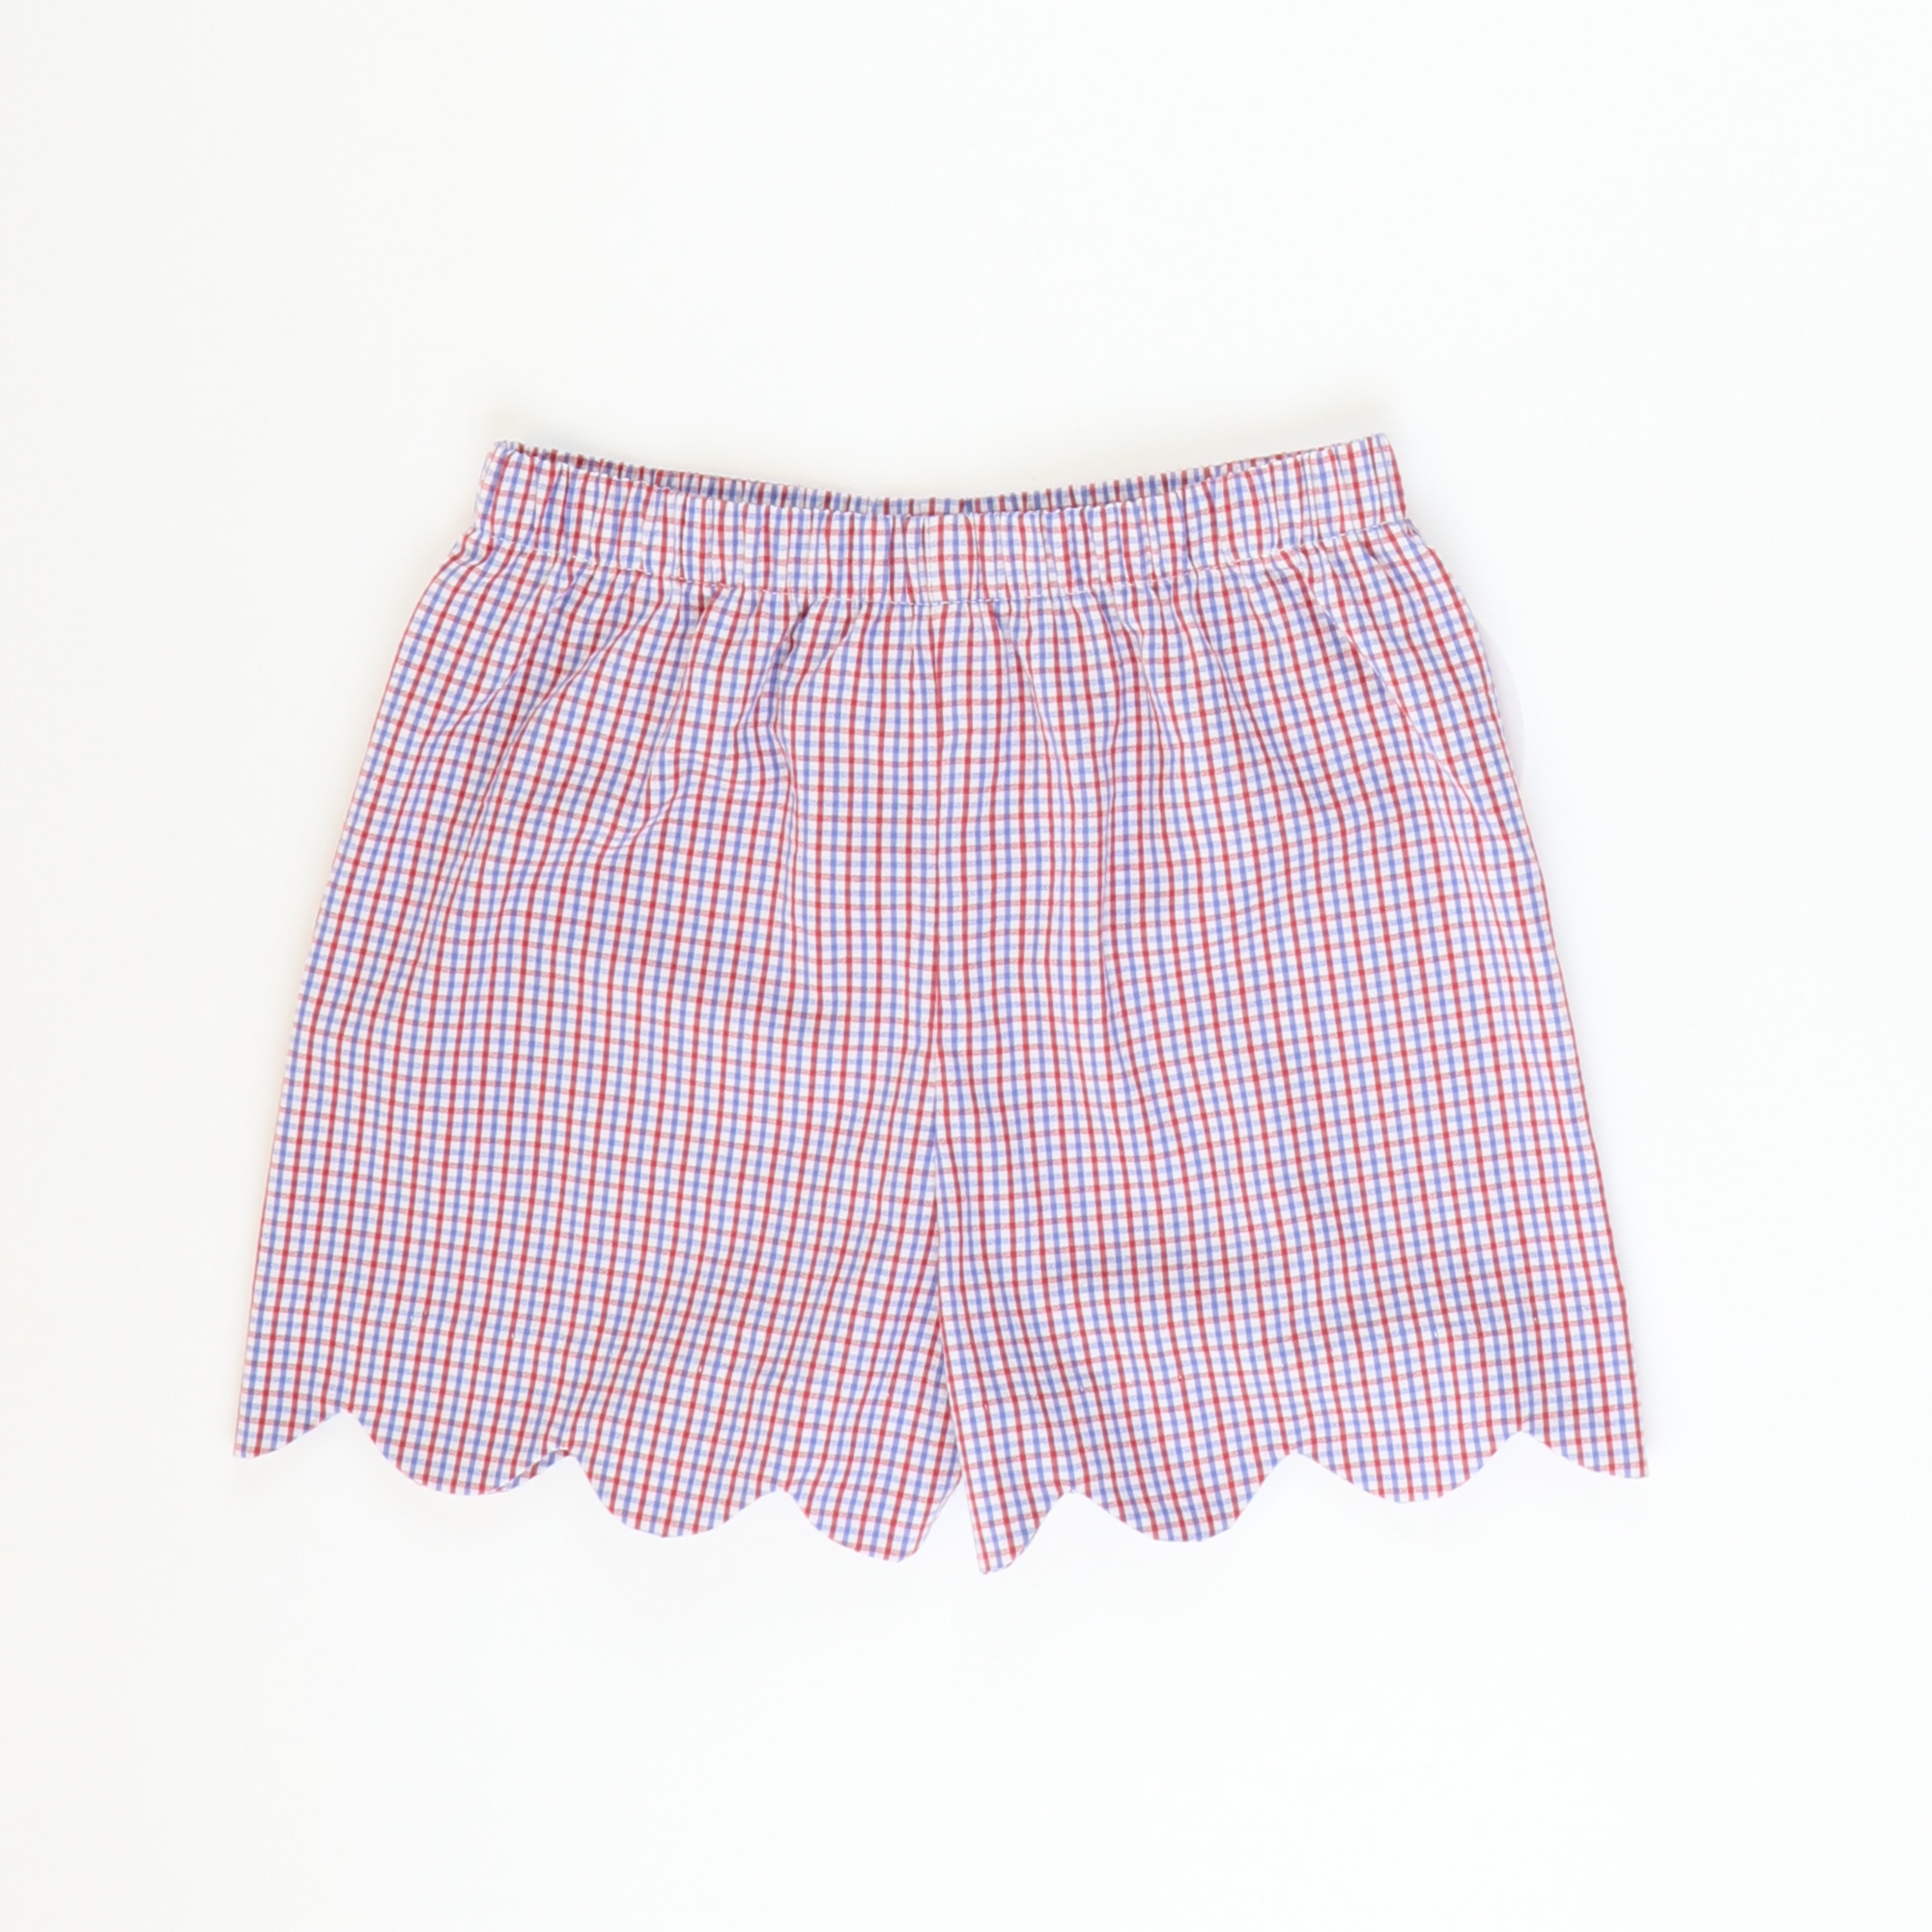 Scalloped Girl Shorts - Patriotic Mini Check Seersucker